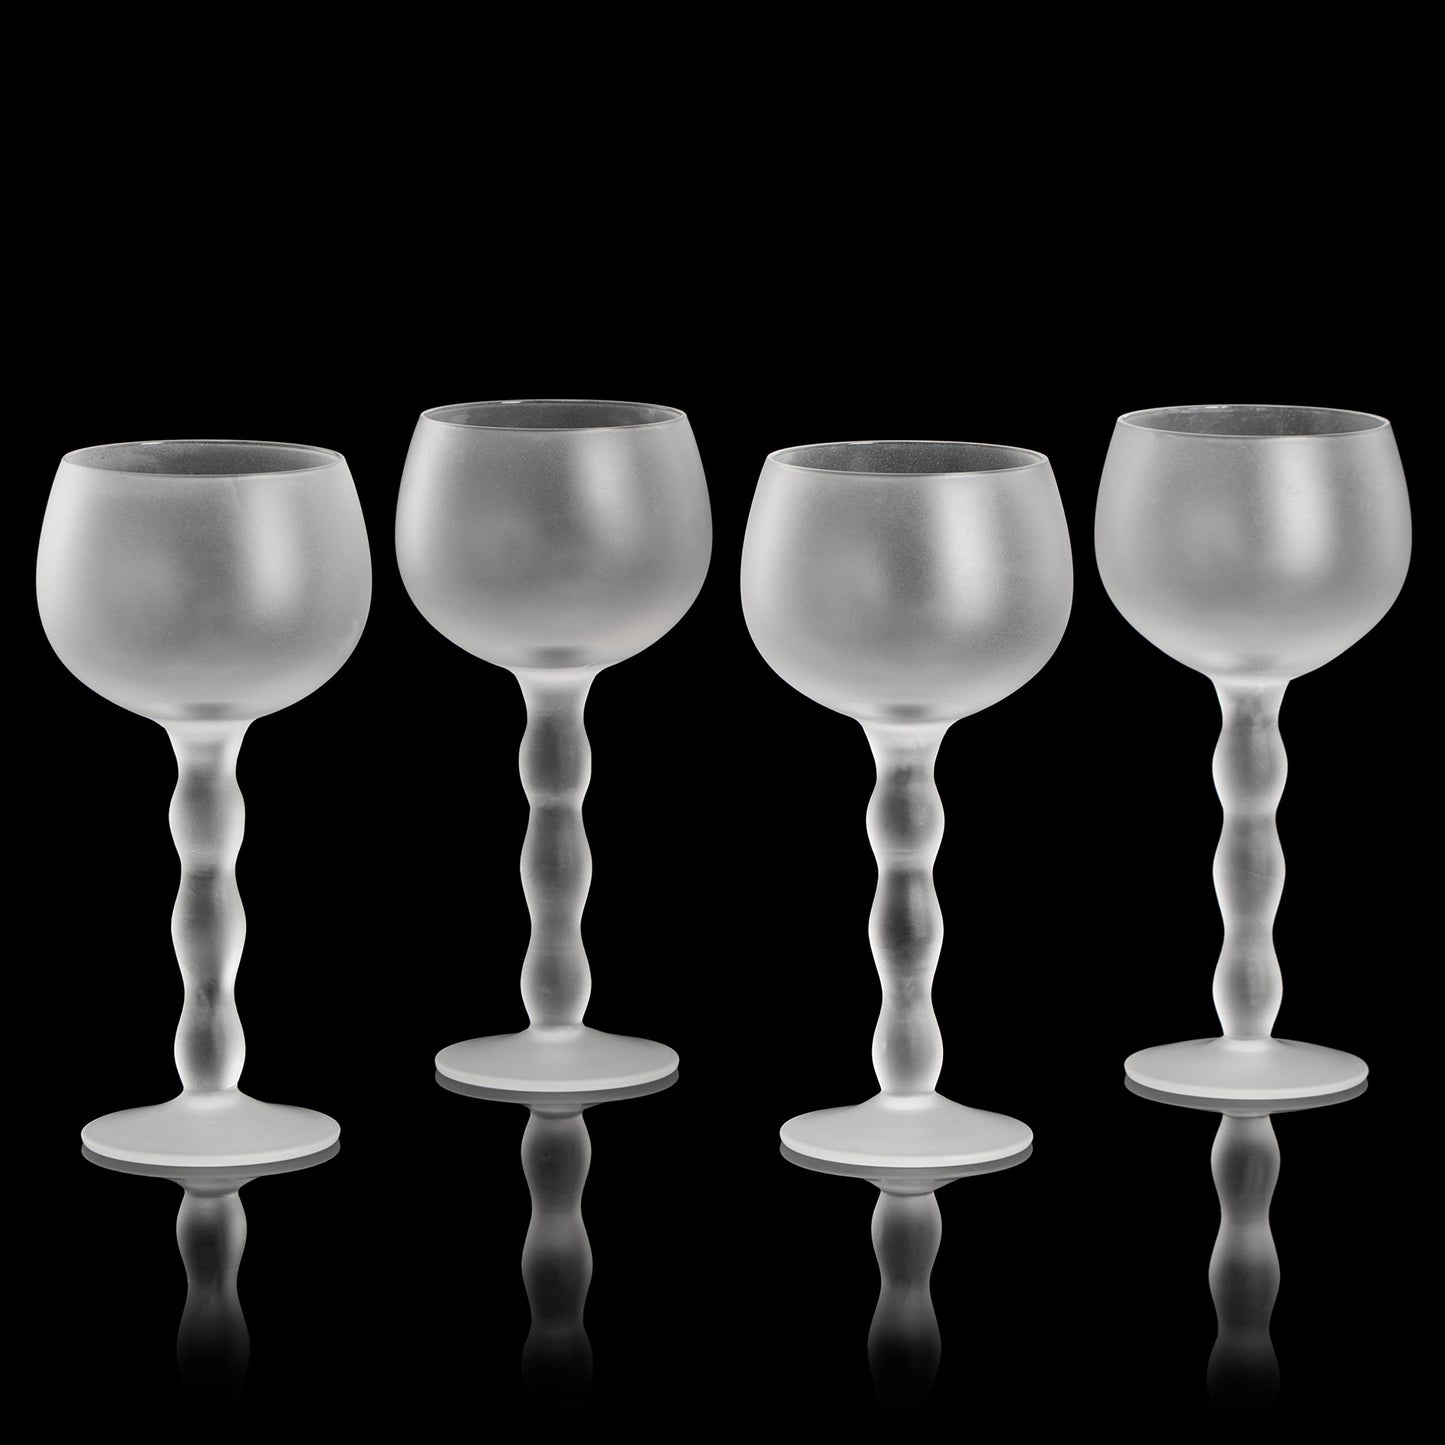 The Wine Savant - Cloud Elegant Crystal Wine & Water Glasses - Hand Blown Premium Sand Blasted Glasses